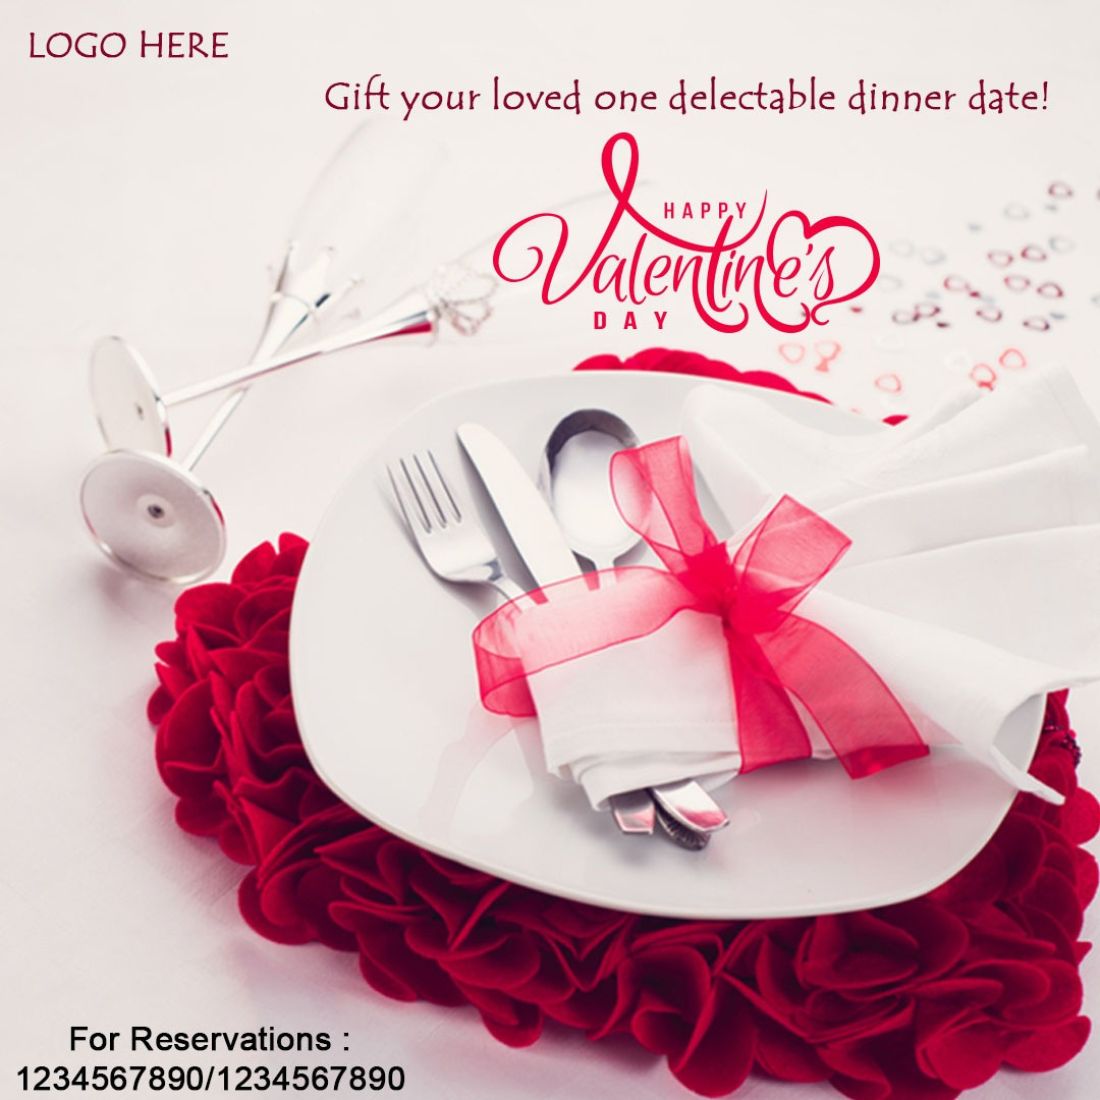 Valentine's Day Restaurant Offer Template for Social Media cover image.